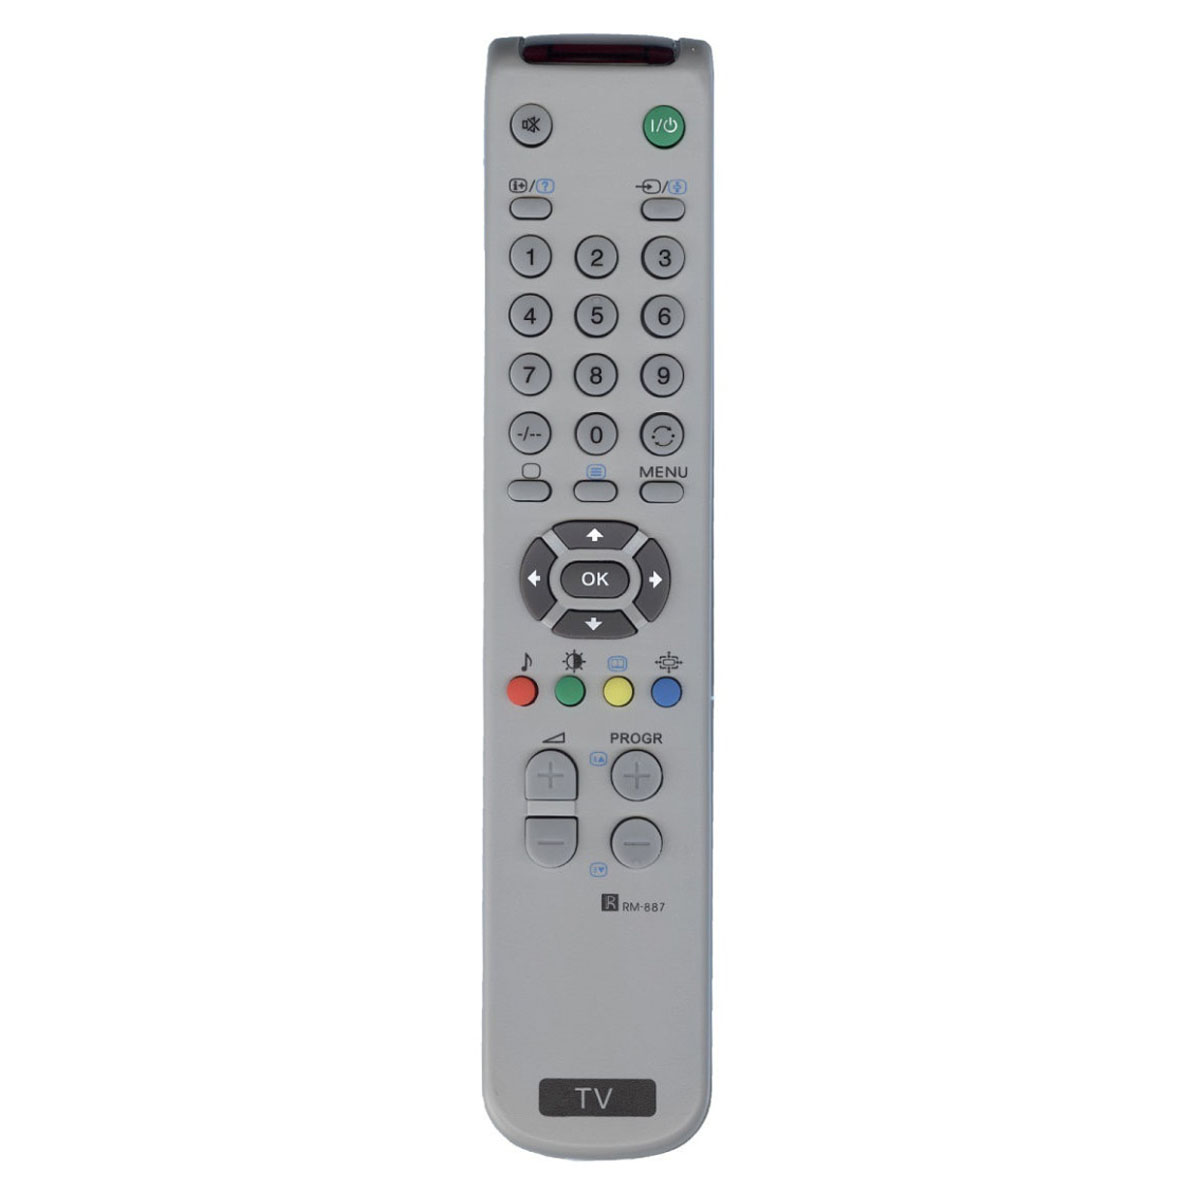 Пульт ДУ RM-887 для телевизоров SONY, цвет серый